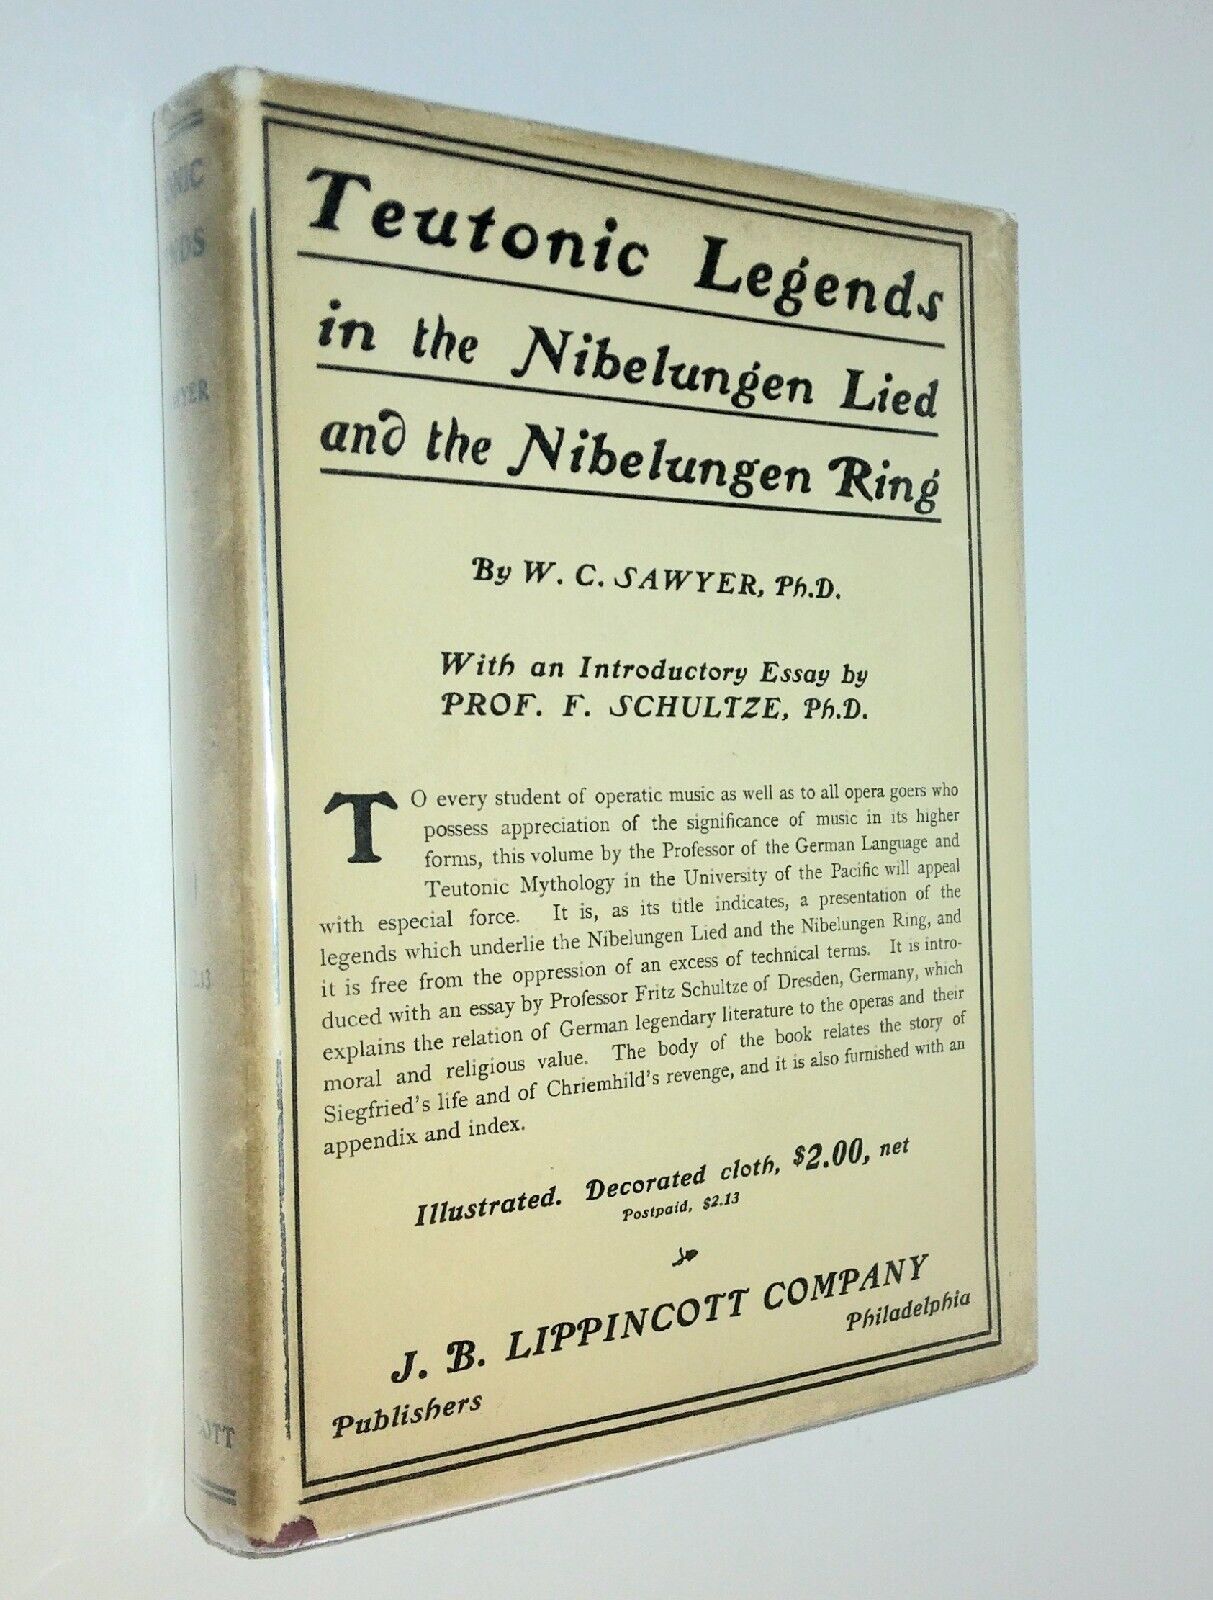 Teutonic Legends Nibelungen Lied Ring Hardcover W. C. Sawyer 1904 antique book 